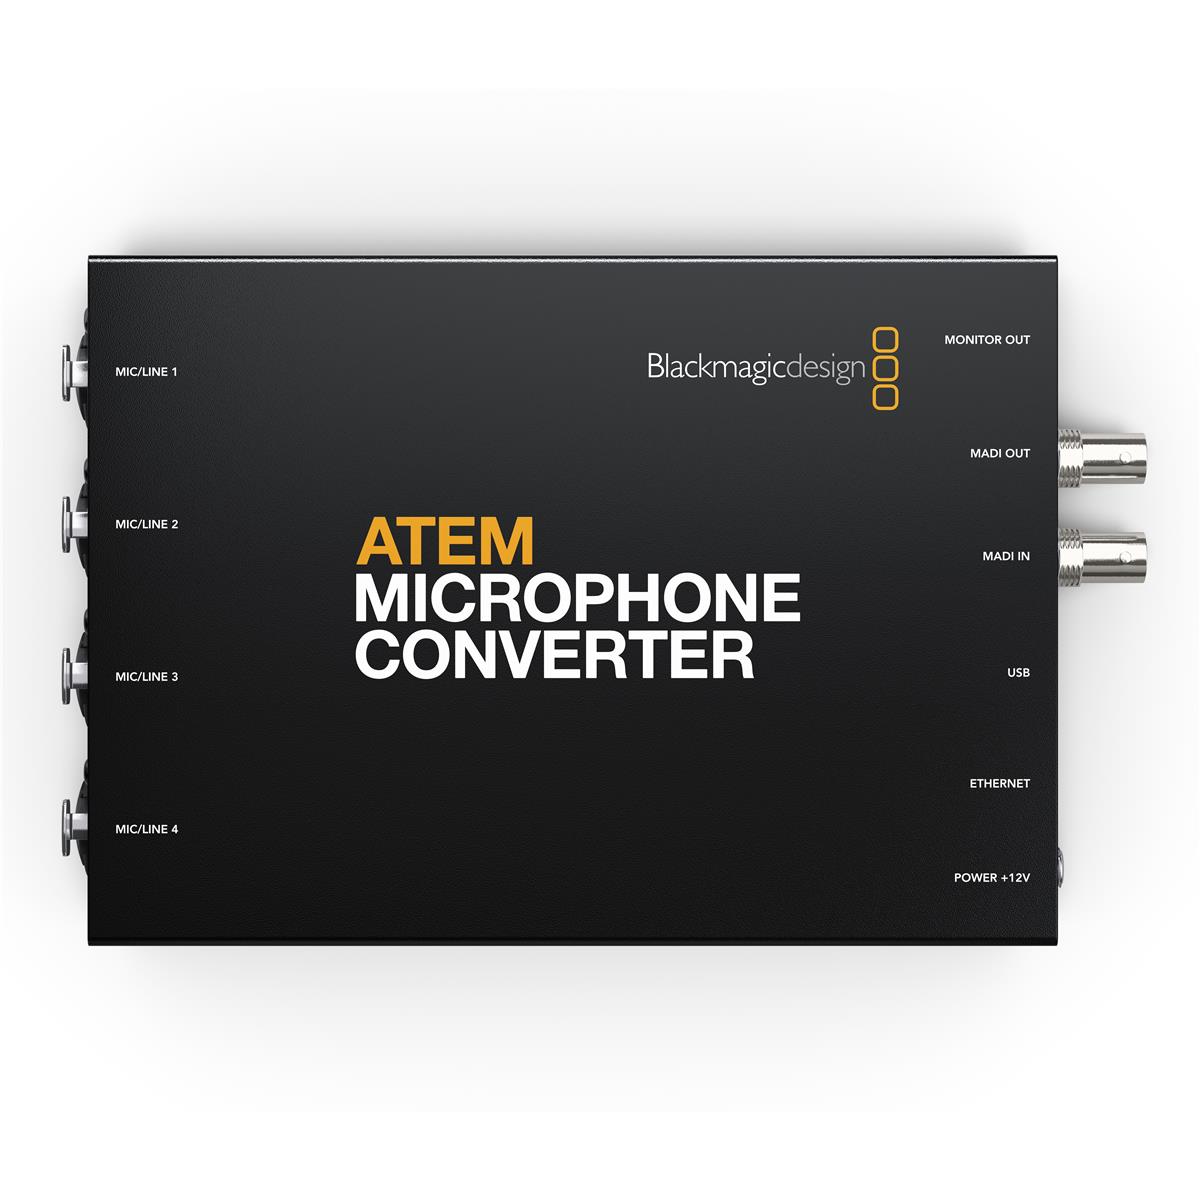 Image of Blackmagic Design Blackmagic Deskign ATEM Microphone Converter